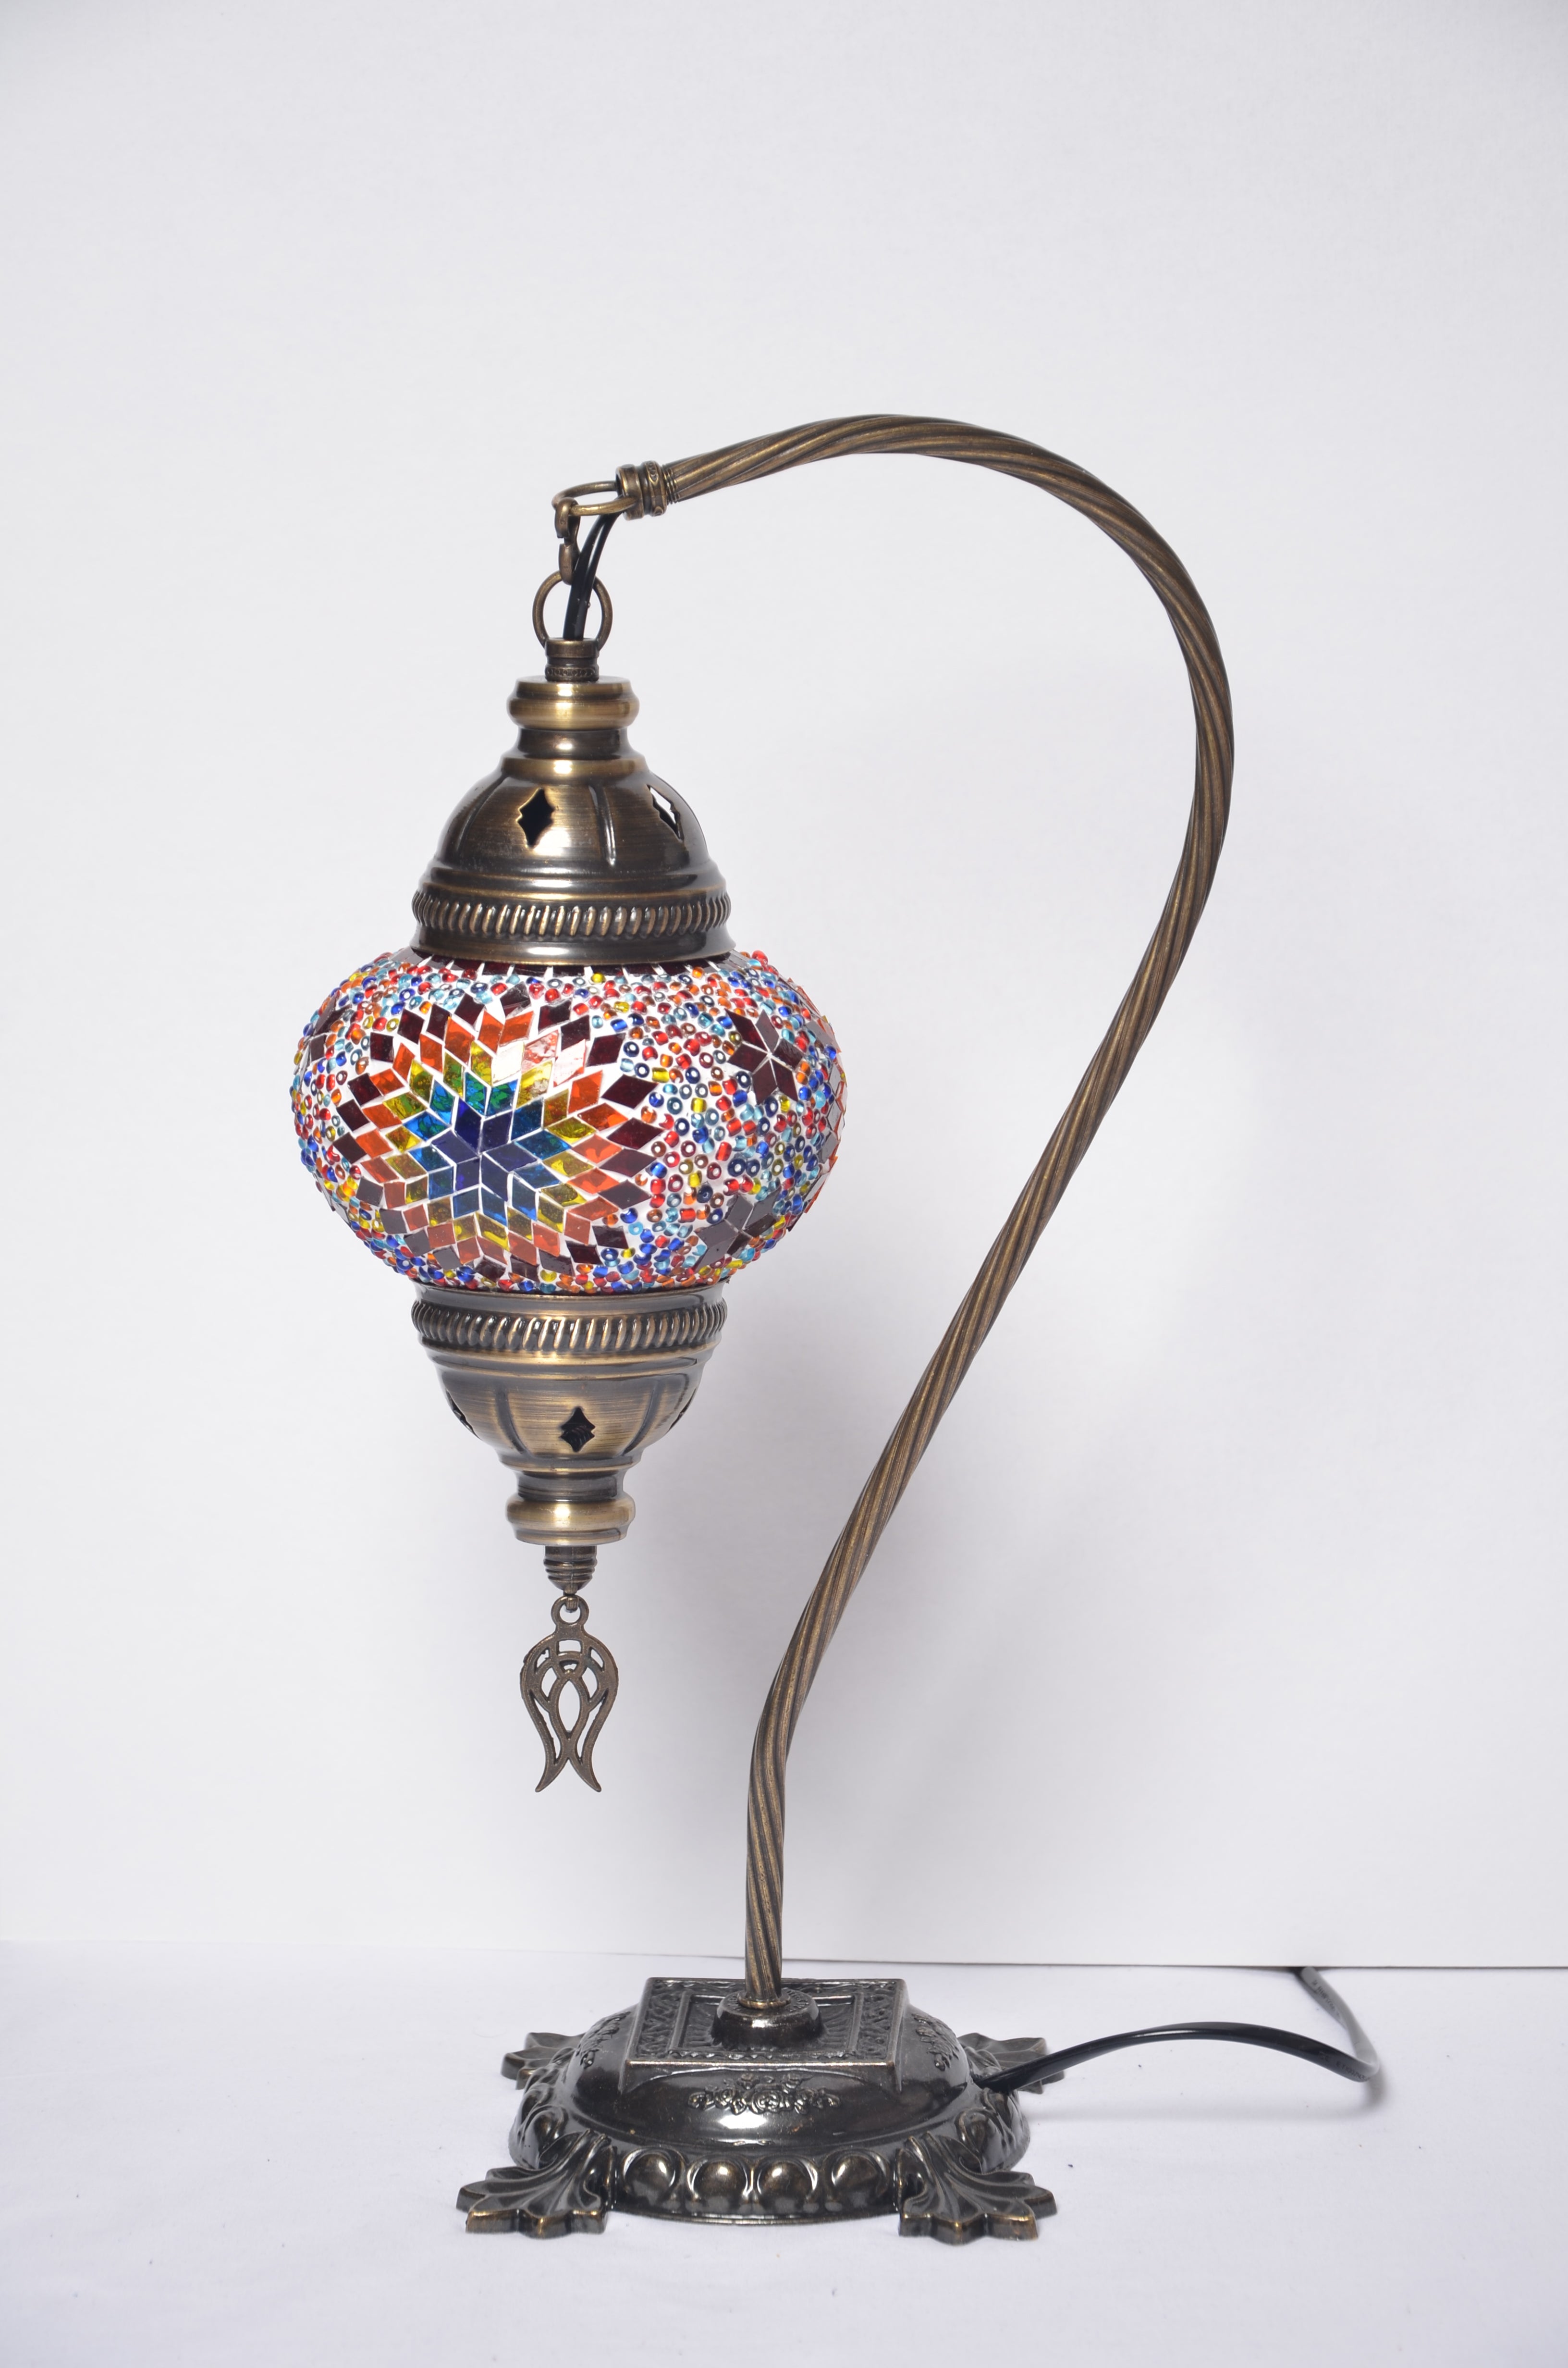 Turkish Swan Neck Mosaic Glass Handmade Decorative Table Lamps - Multicolor Star - Unique Custom Moroccan Lamp Shades - KAFTHAN